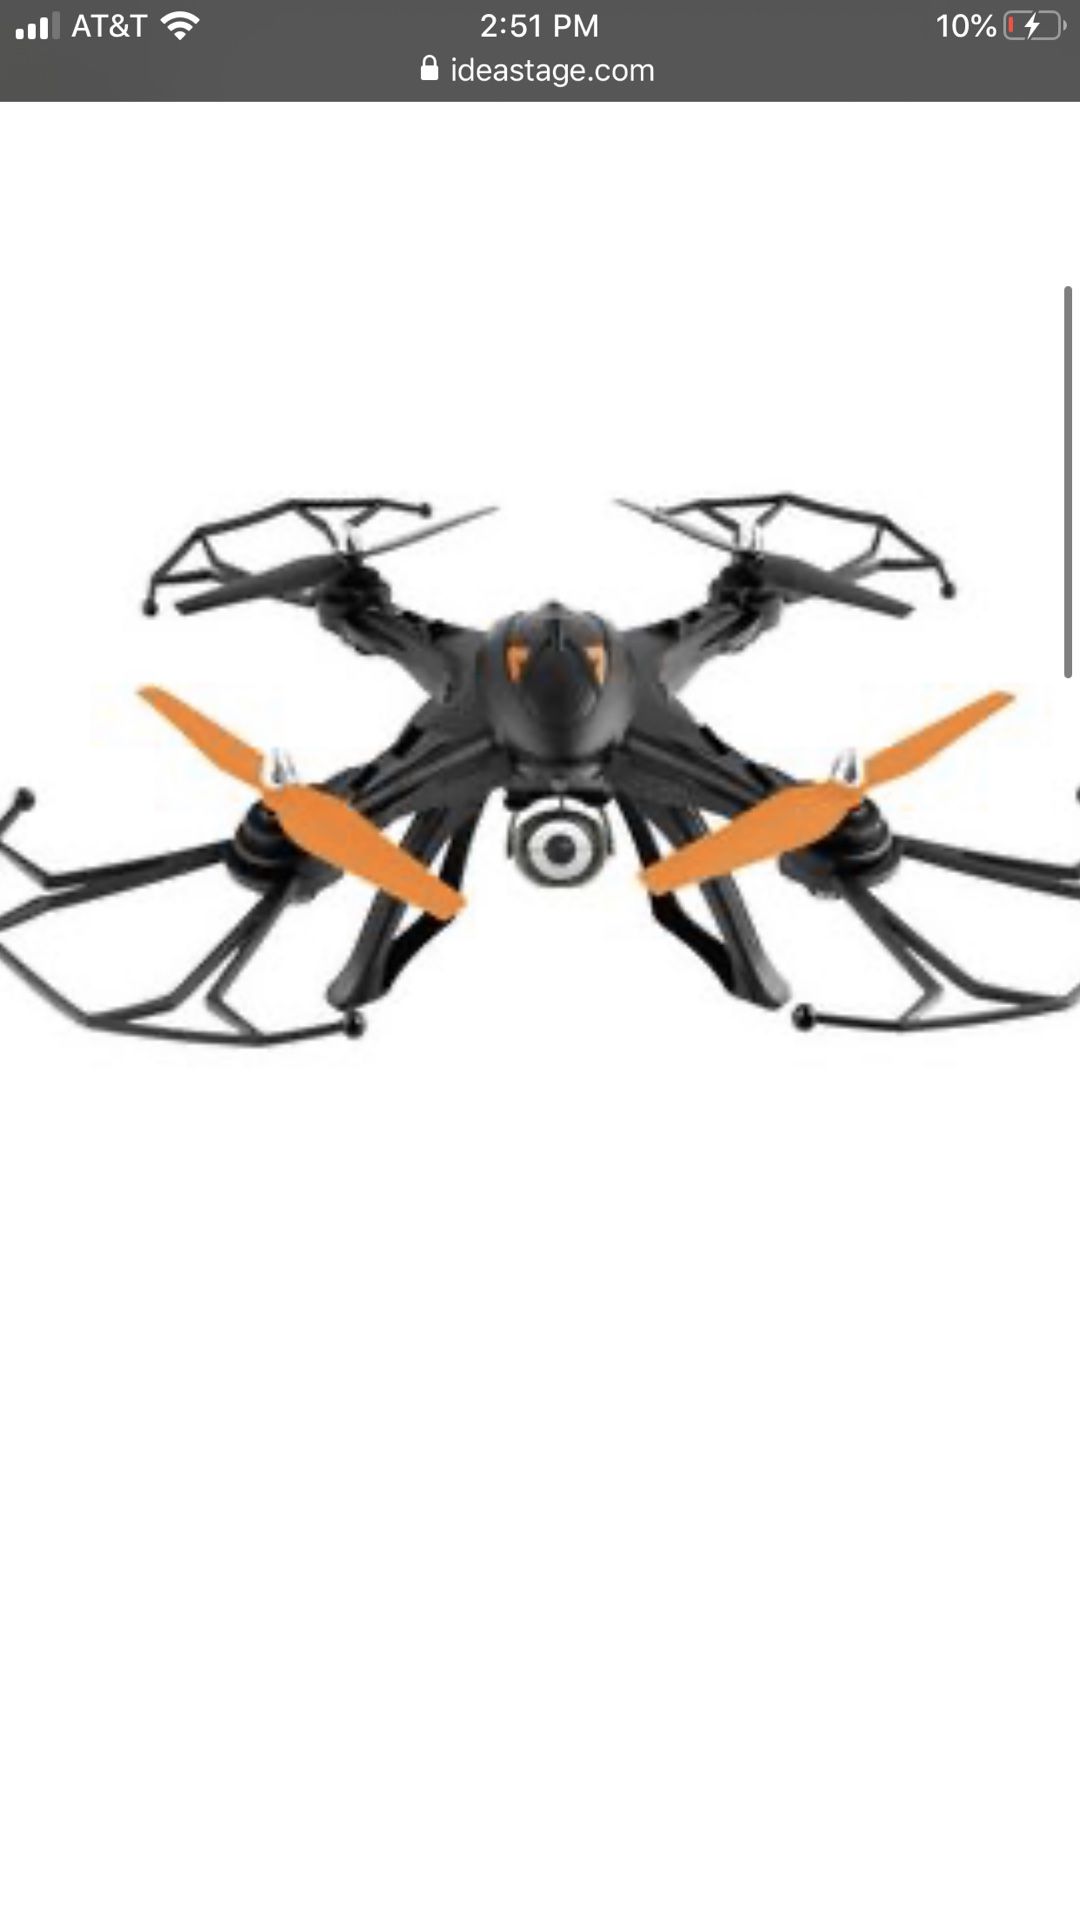 VIVITAR drone